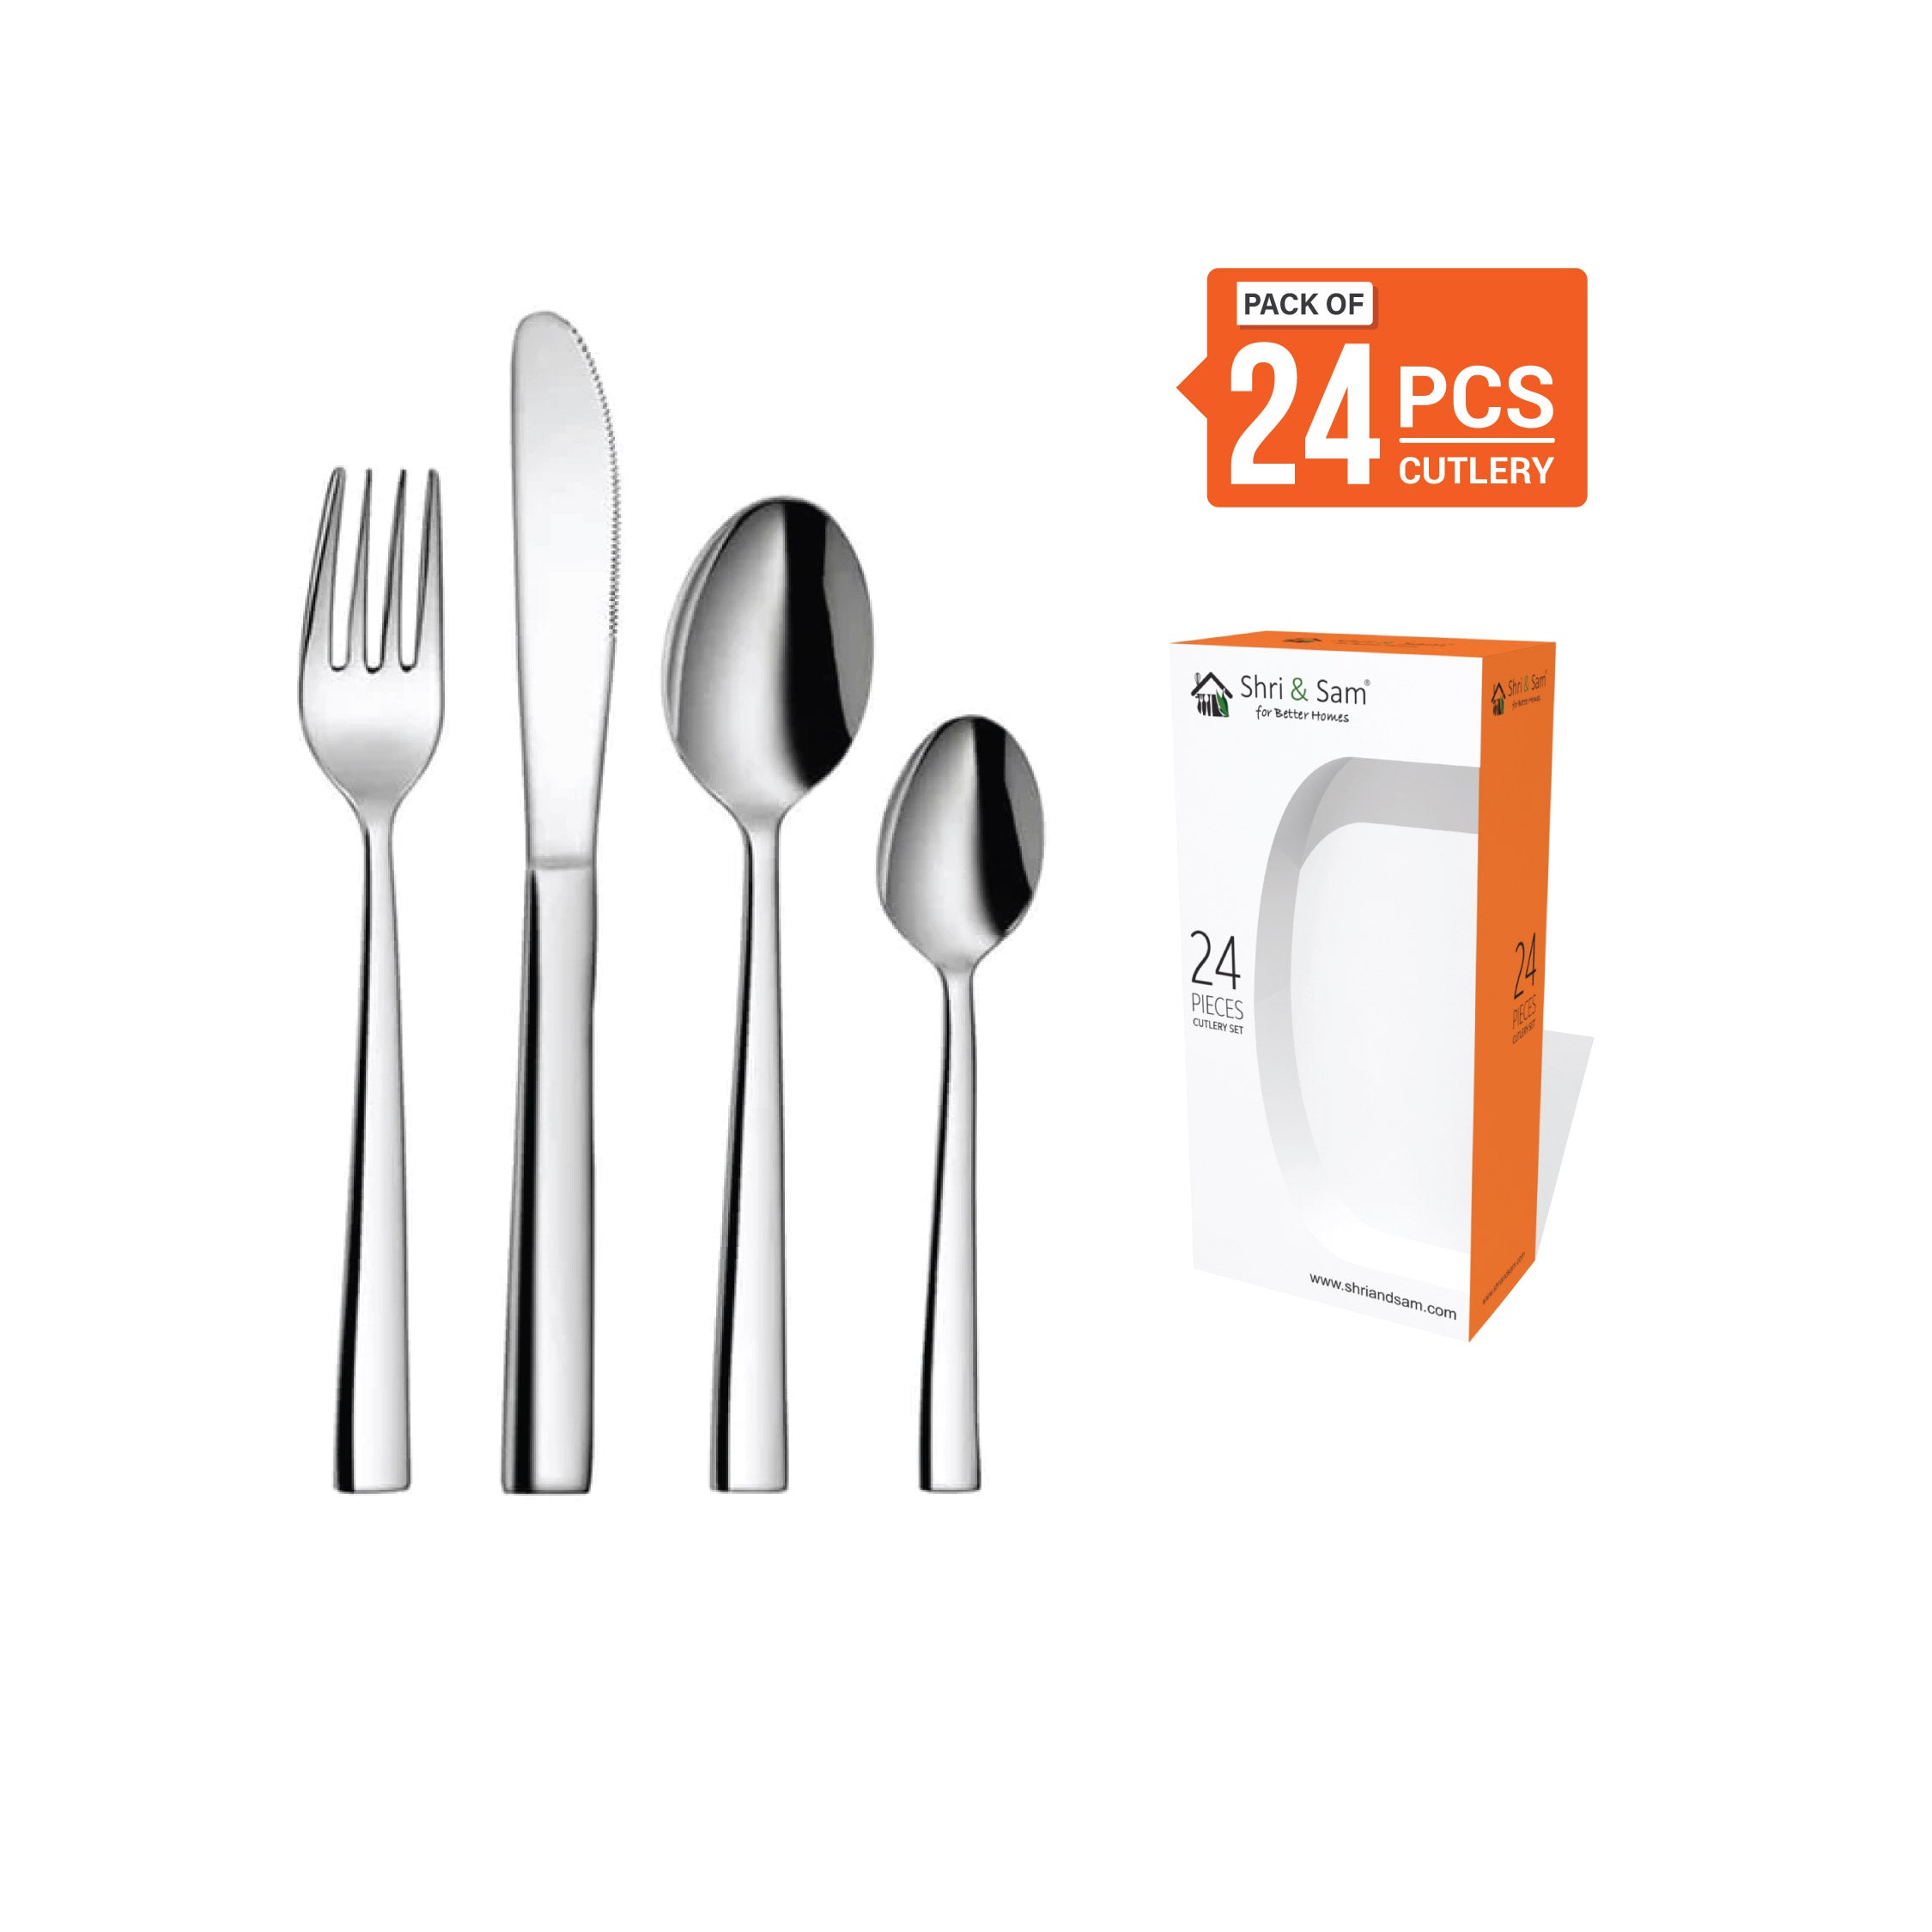 Stainless Steel 24 PCS Cutlery Set (6 Pcs Baby Spoon, 6 Pcs Dessert Spoon, 6 Pcs Dessert Fork and 6 Pcs Dessert Knife) Lotus Plain